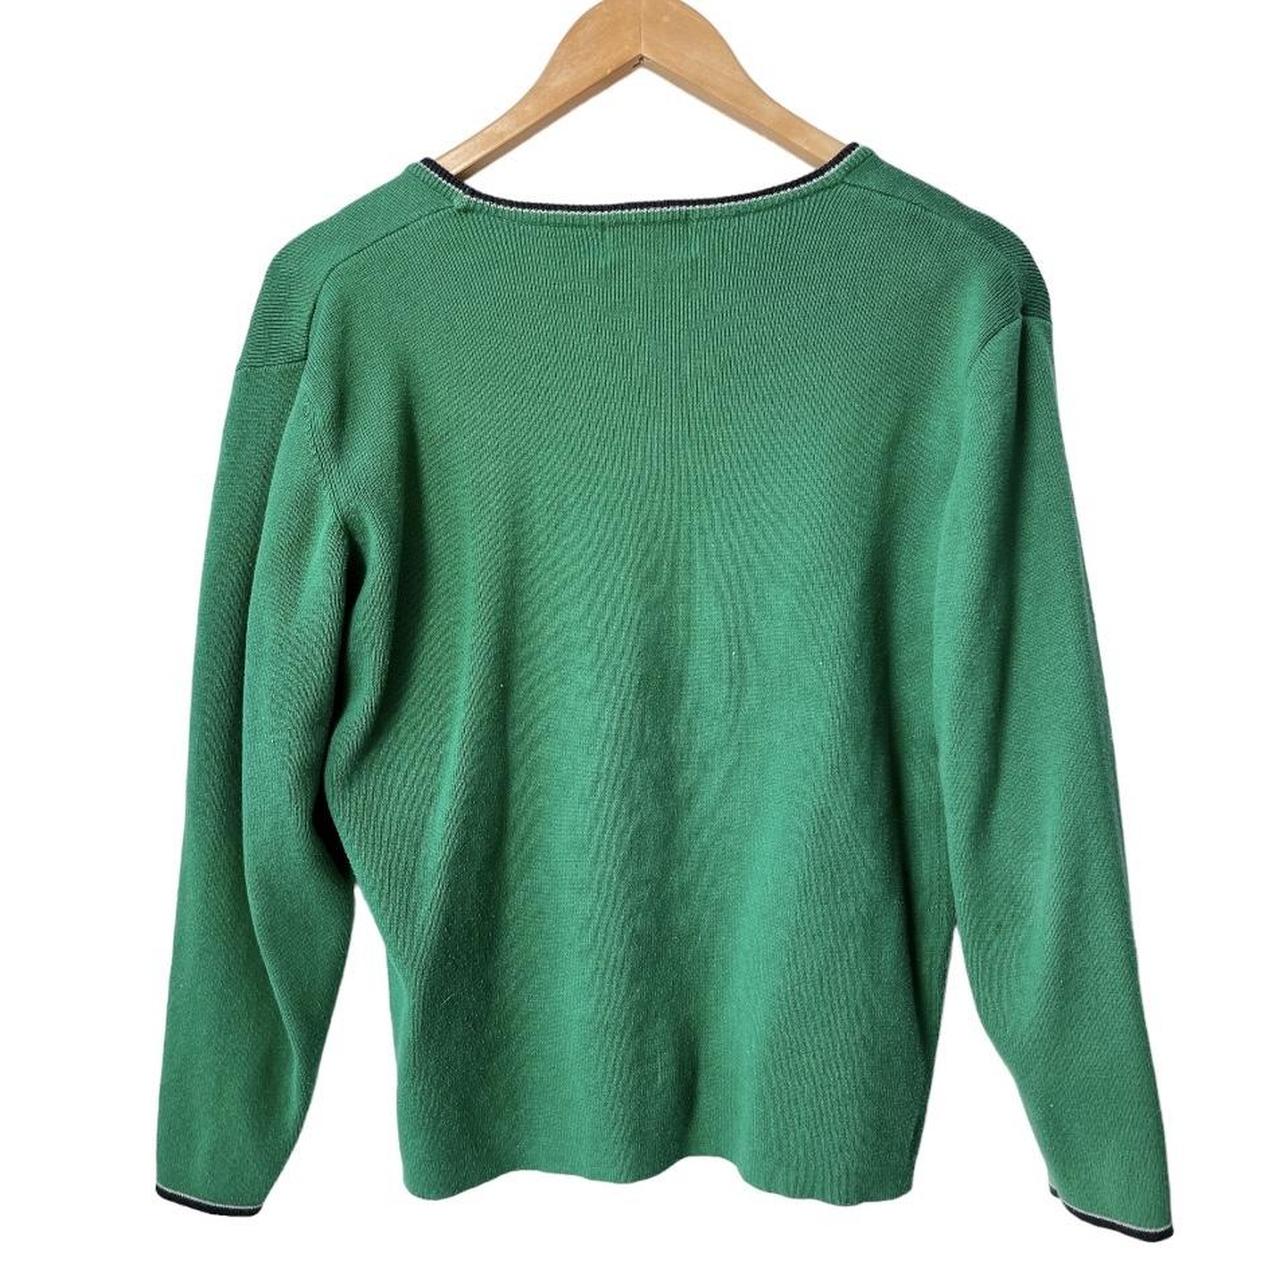 Vintage Teal Green Stripe Edge Knitted Cardigan